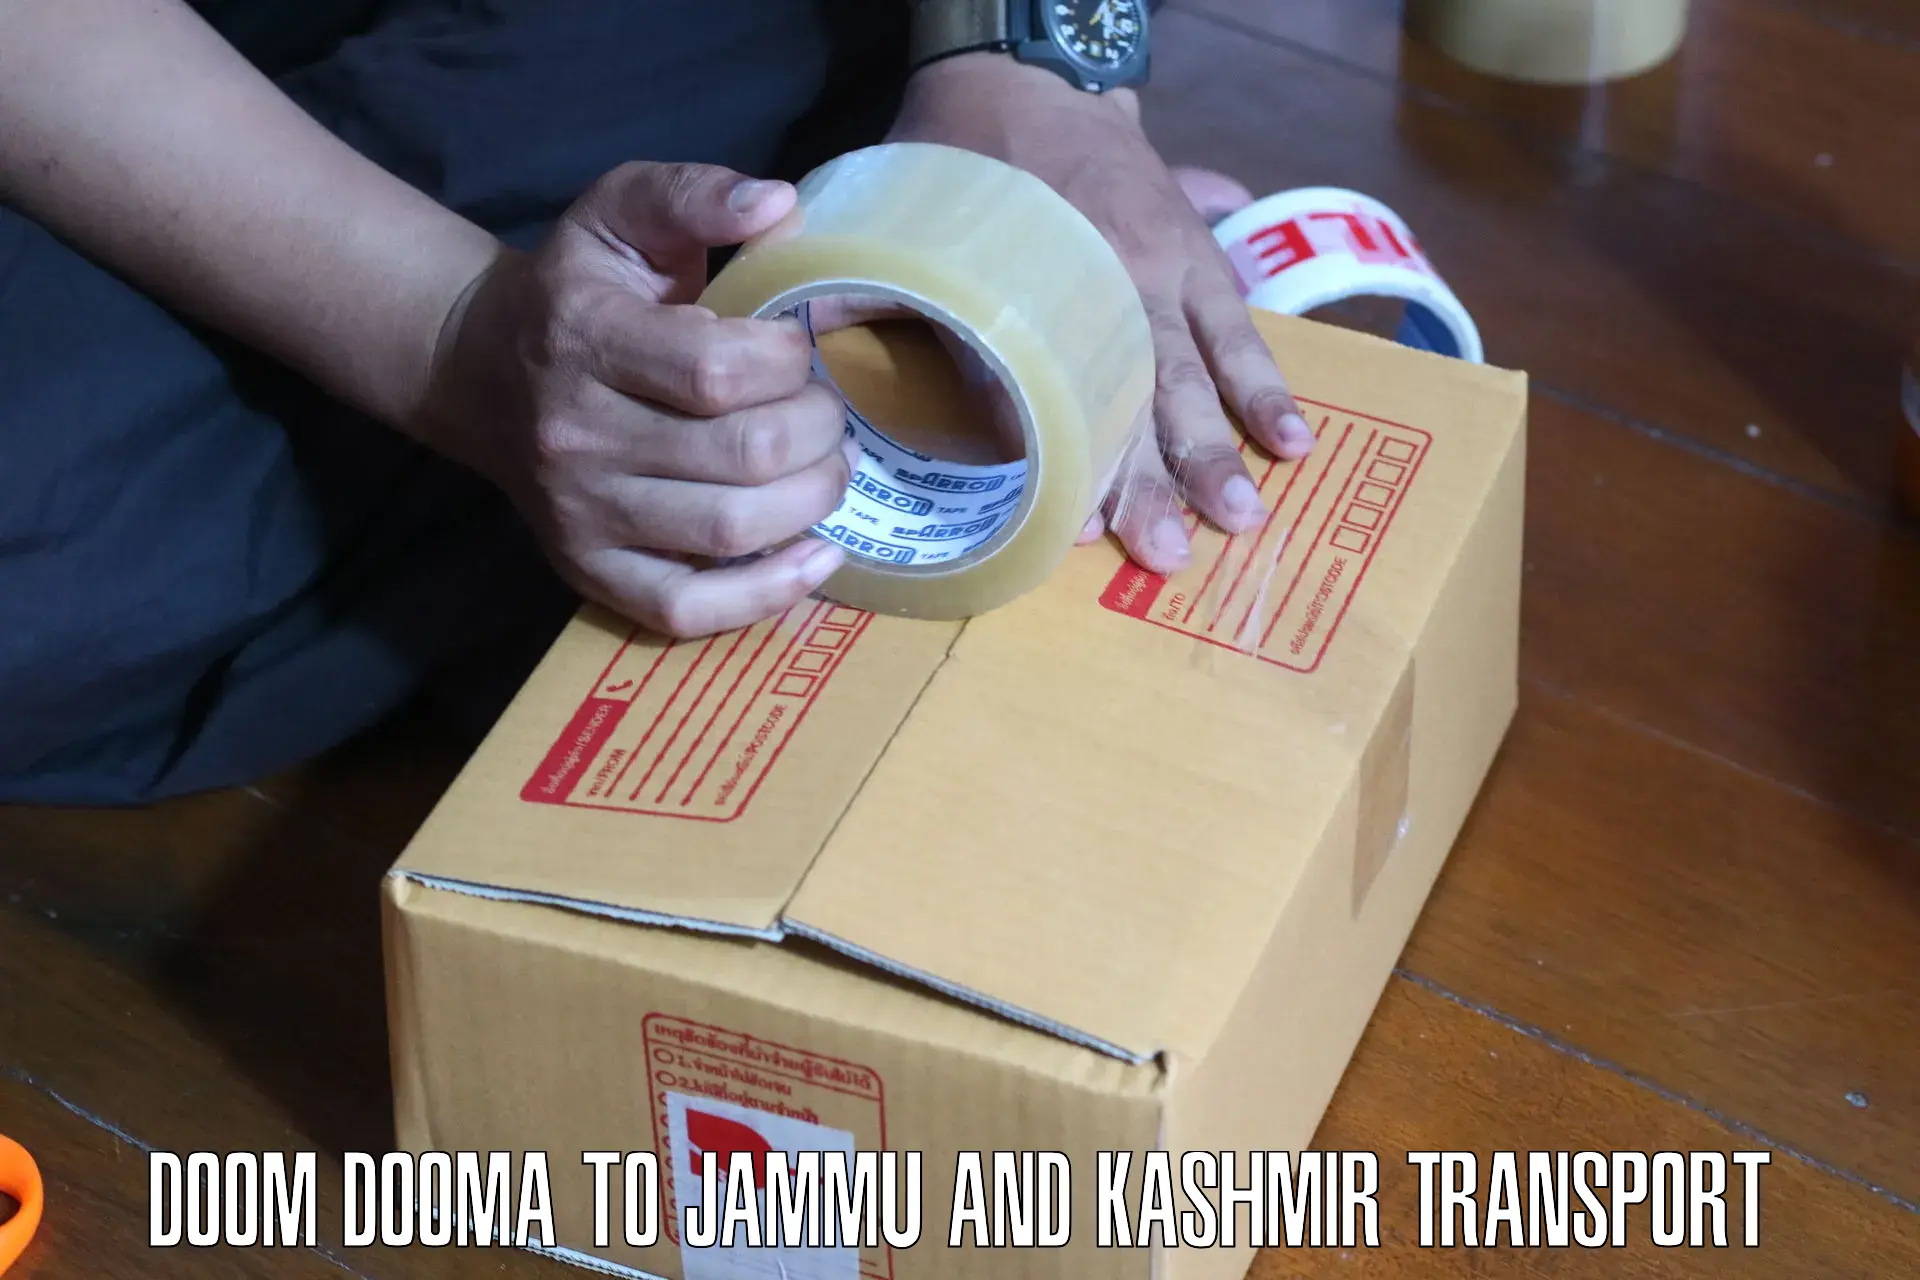 Shipping services Doom Dooma to Srinagar Kashmir